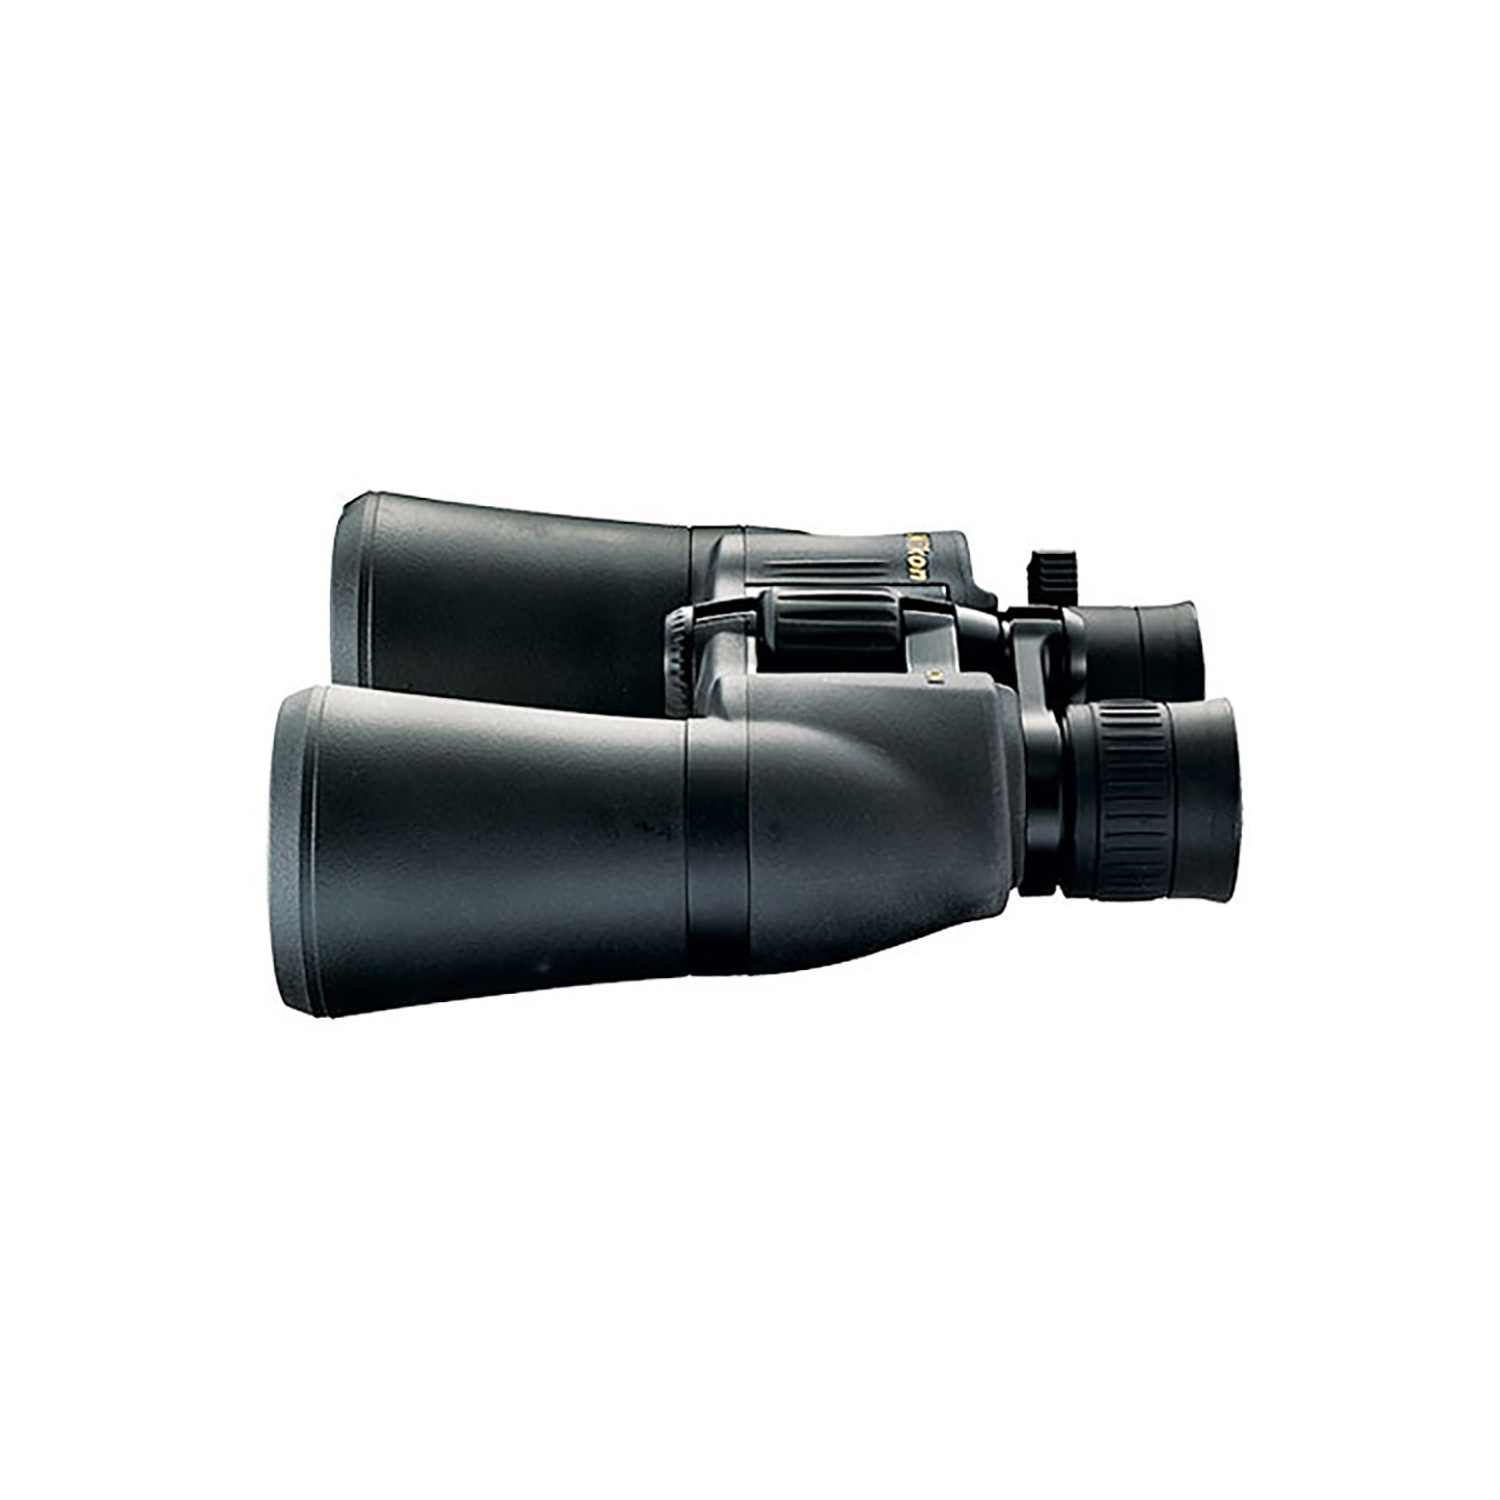 Binoculaires Nikon Aculon A211 - 10-22x50